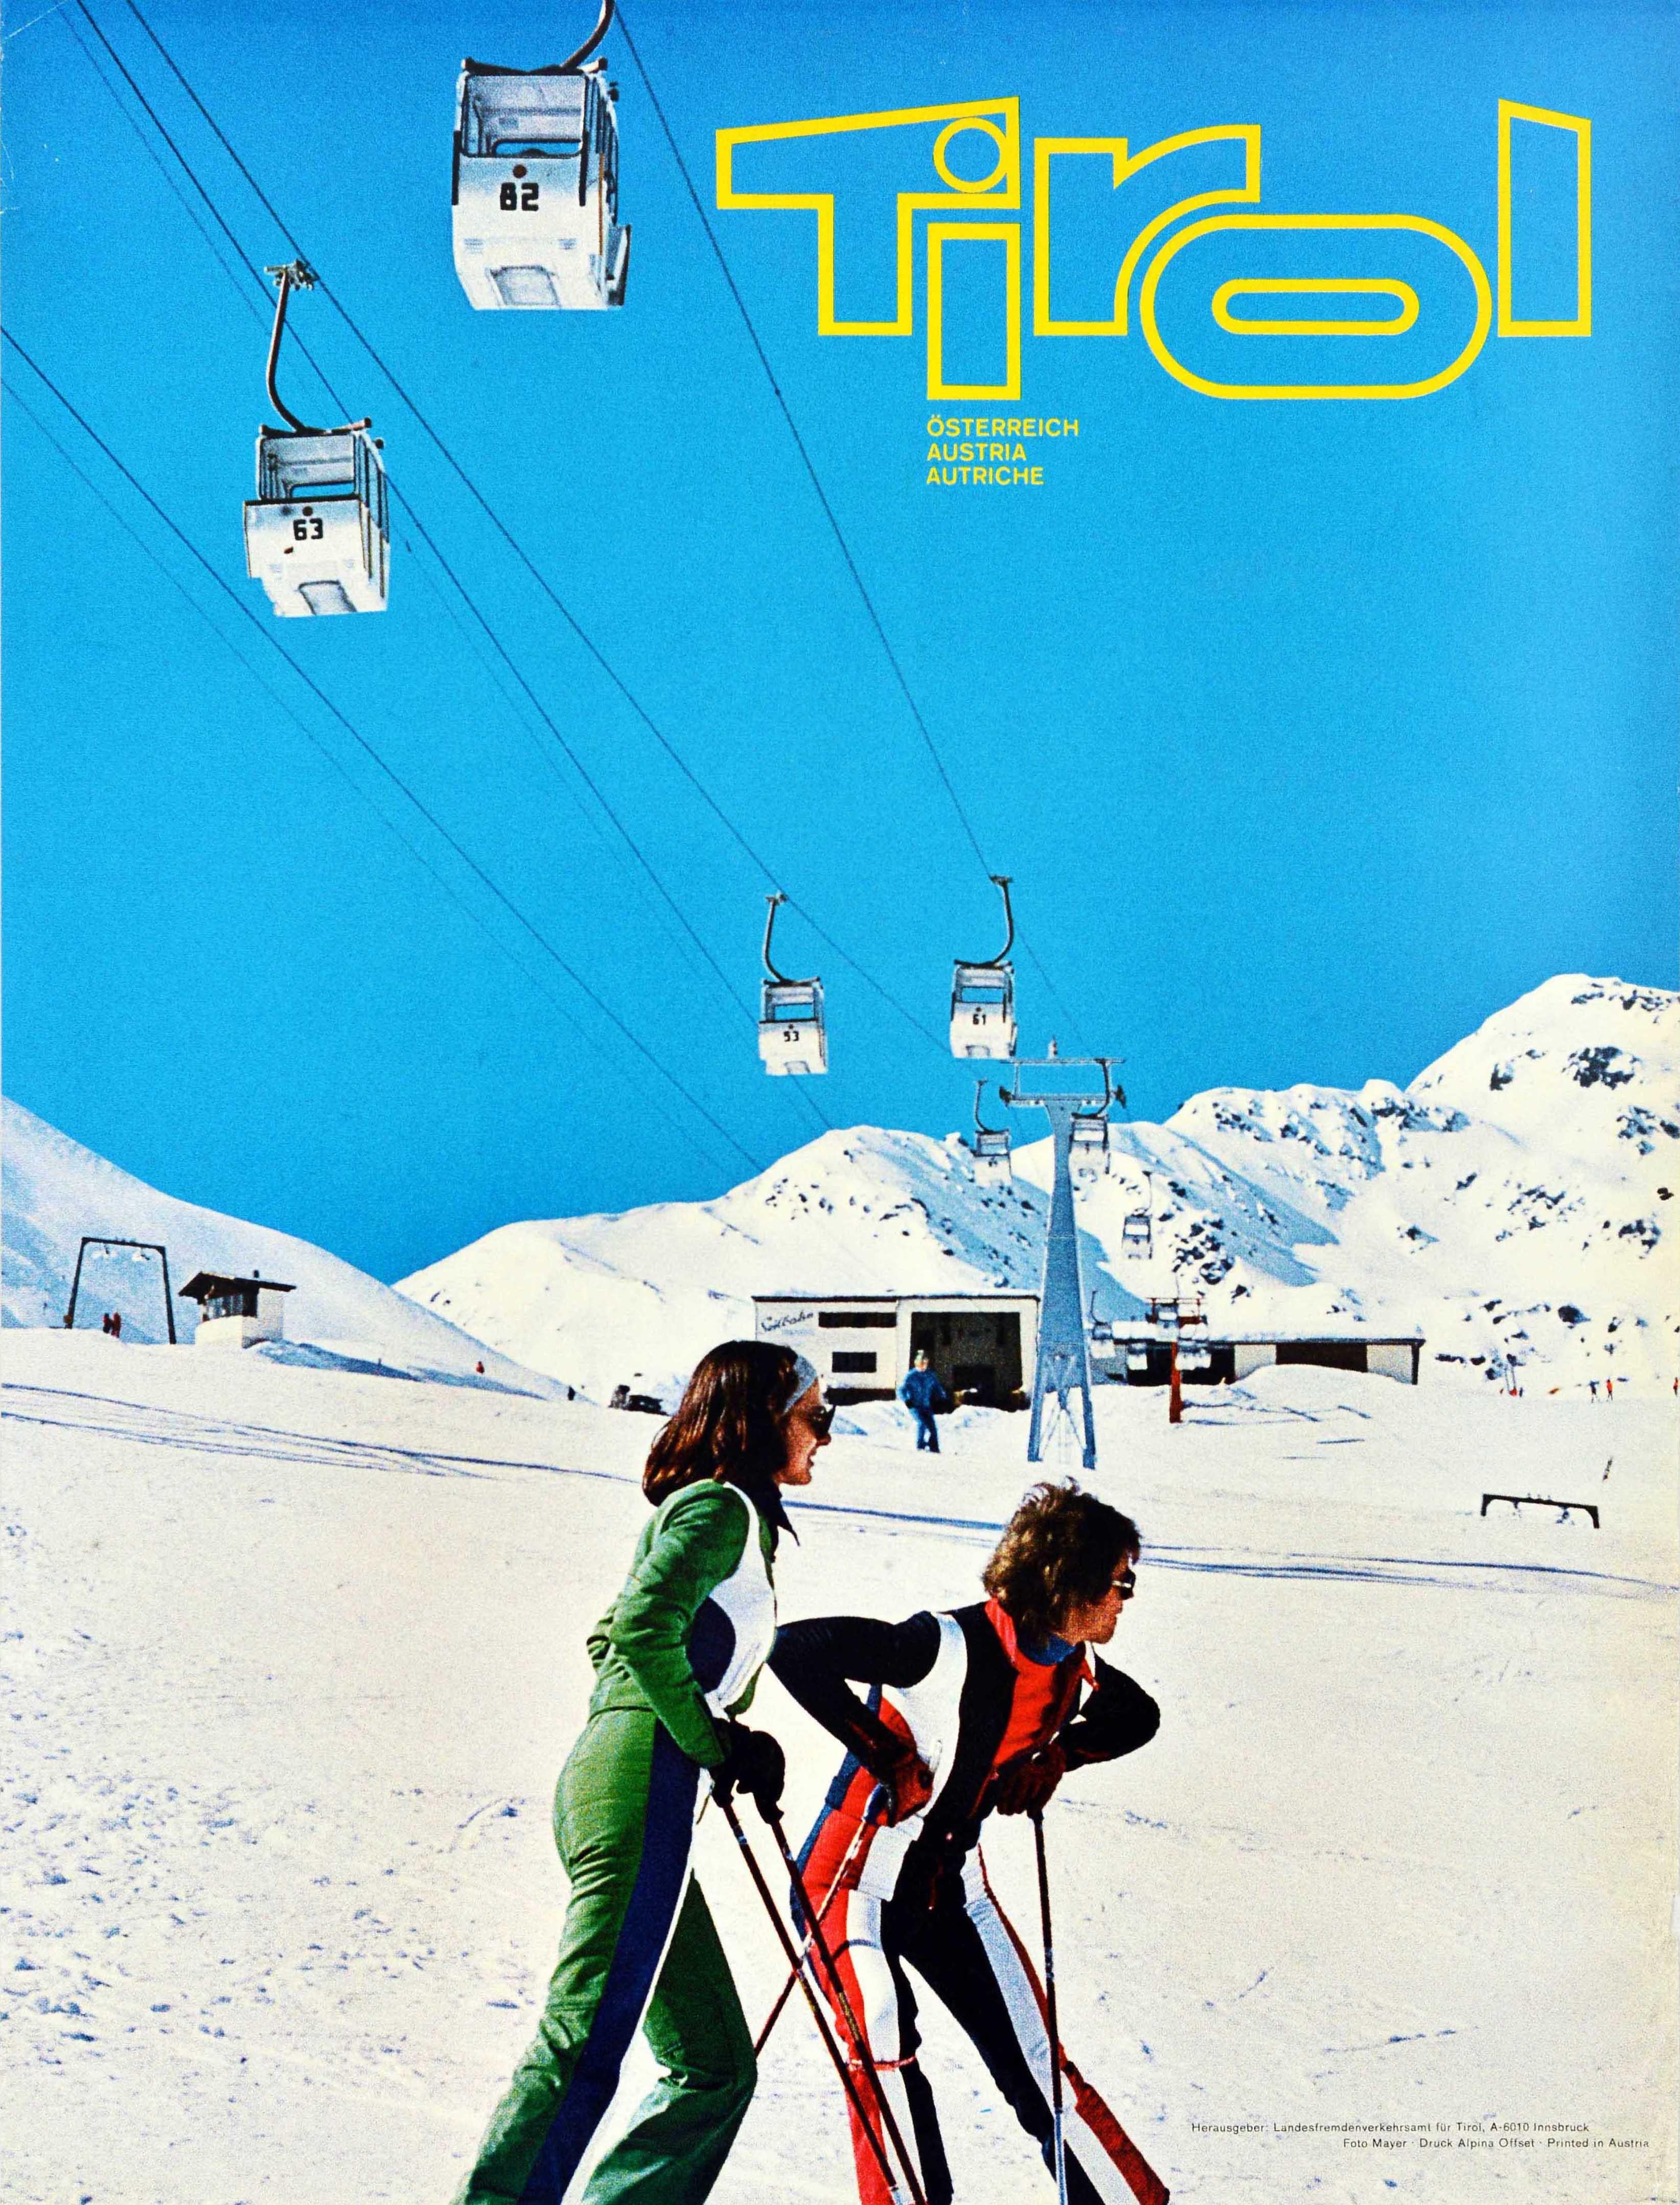 Travel Austria Ski Lodge Alps Snow 12X16 Inch Framed Art Print 